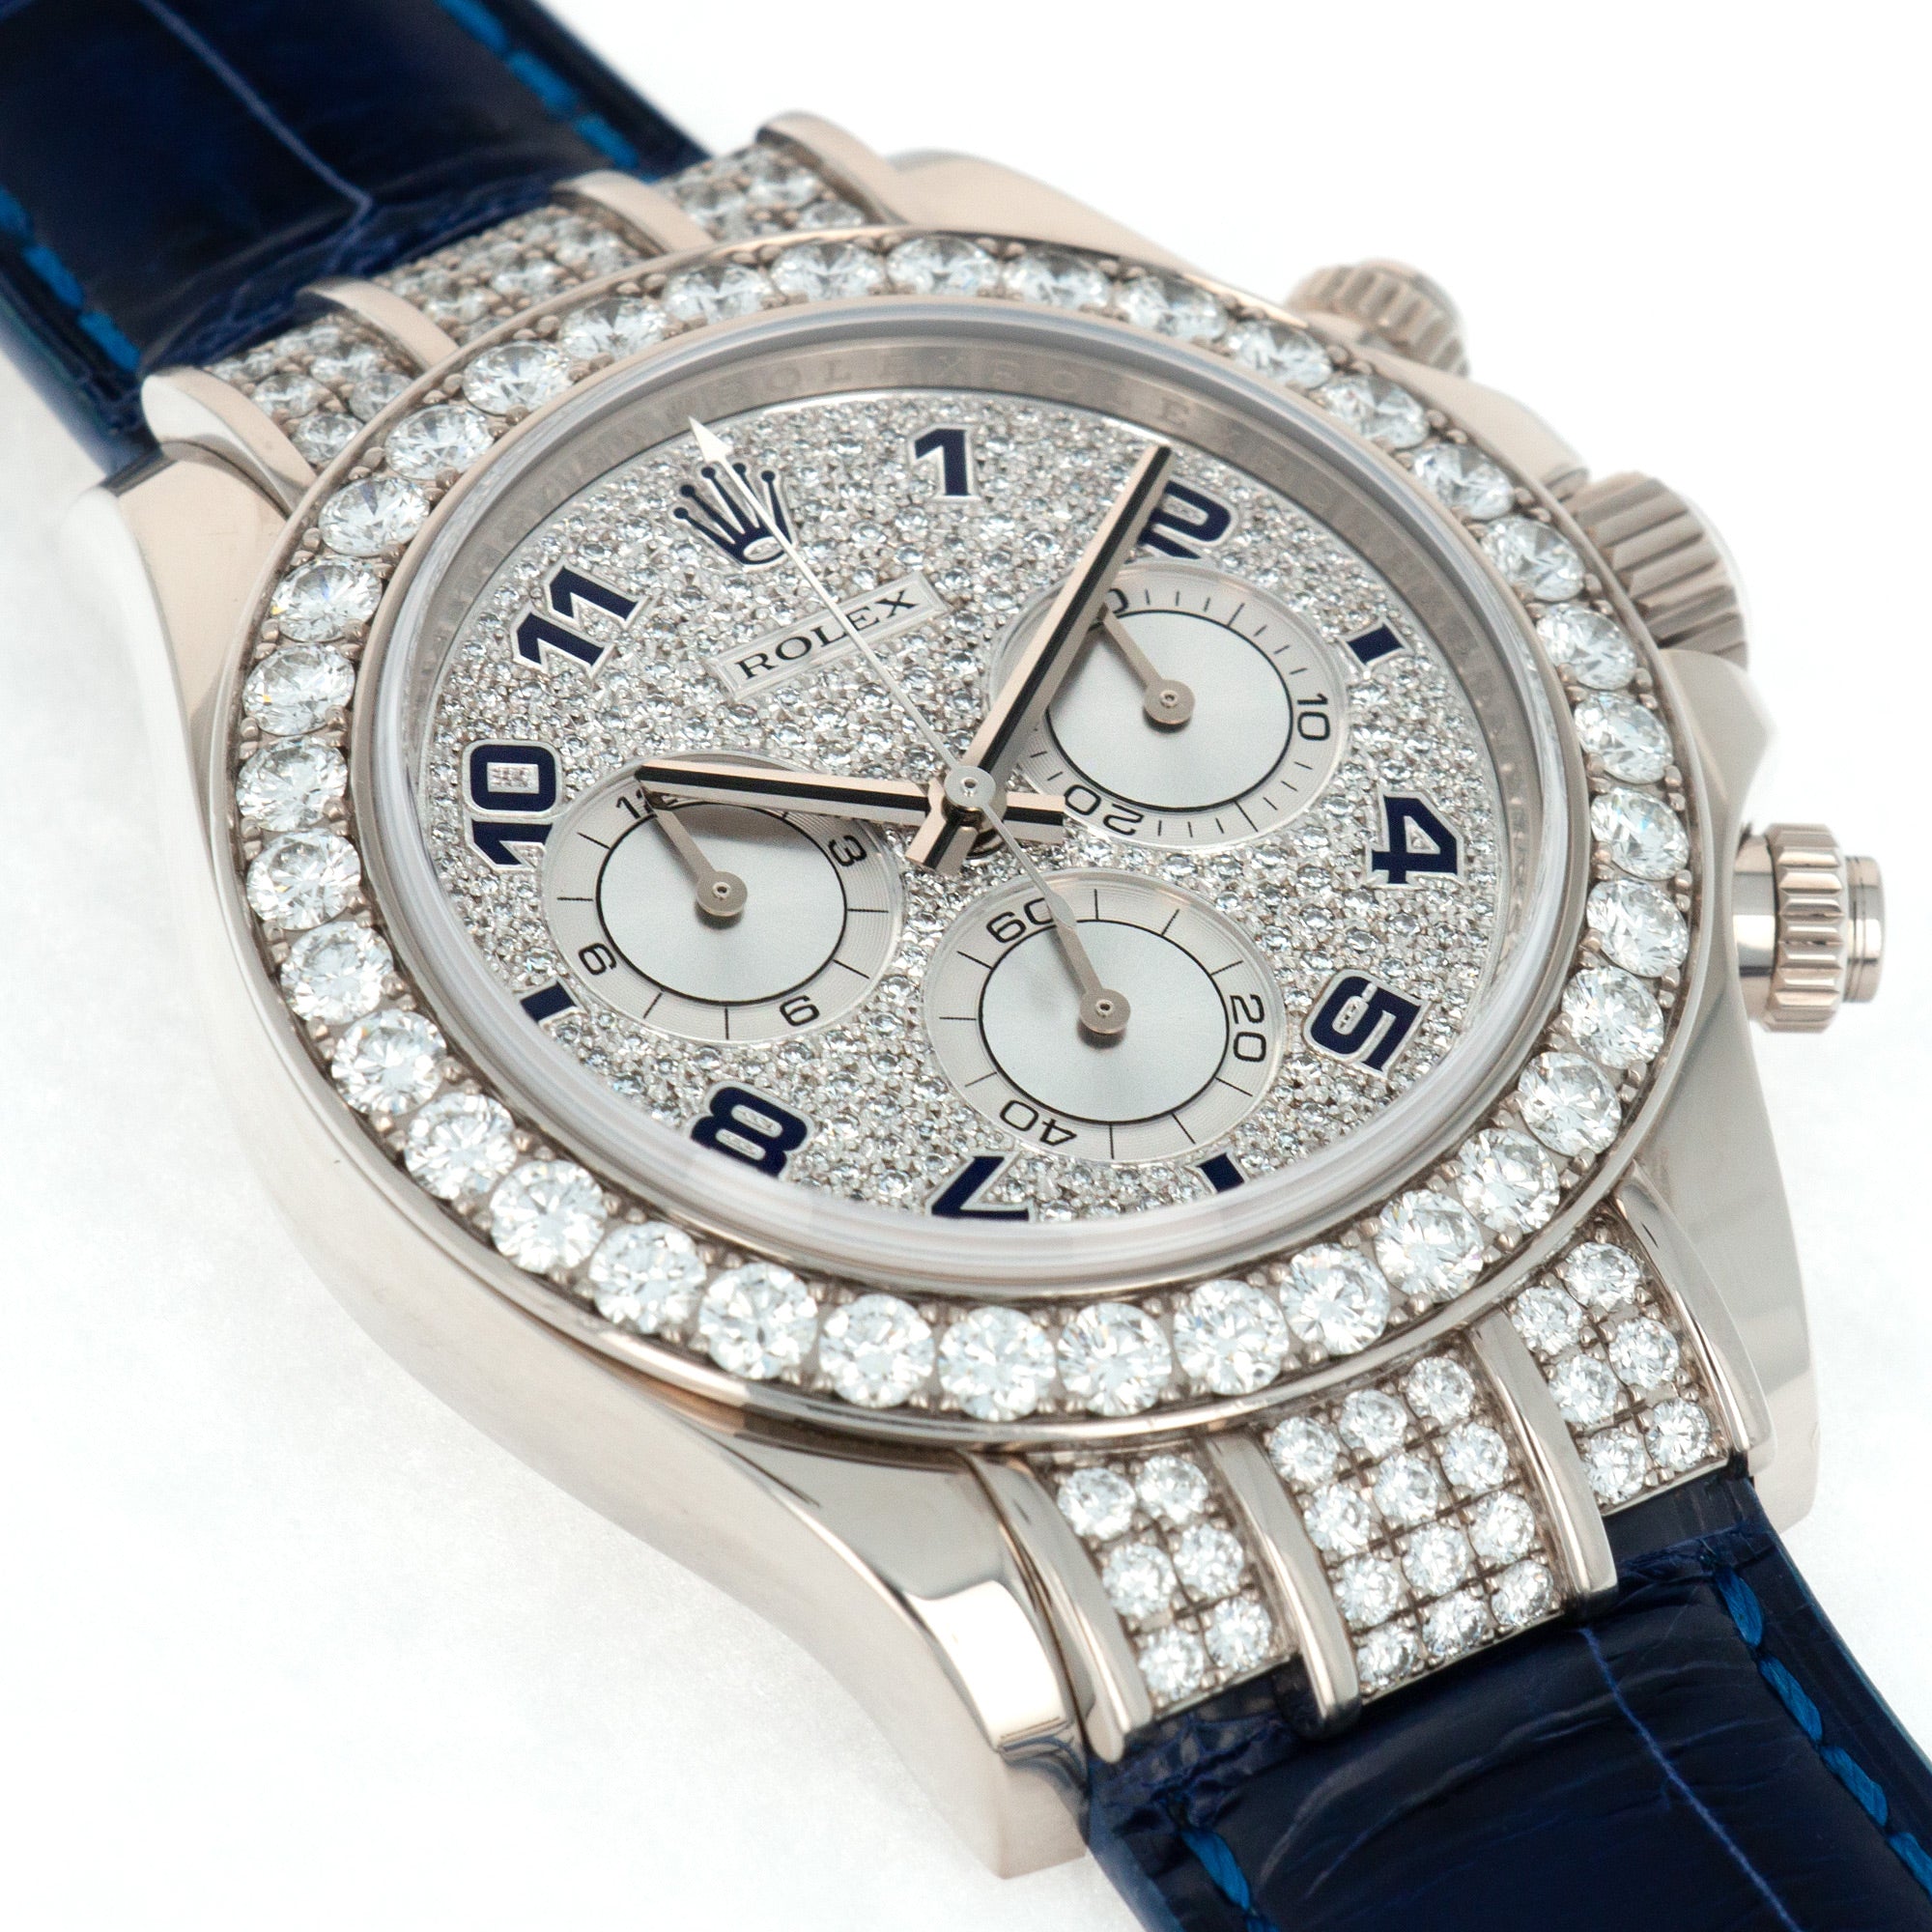 Rolex - Rolex White Gold Cosmograph Daytona Watch Ref. 116599 - The Keystone Watches